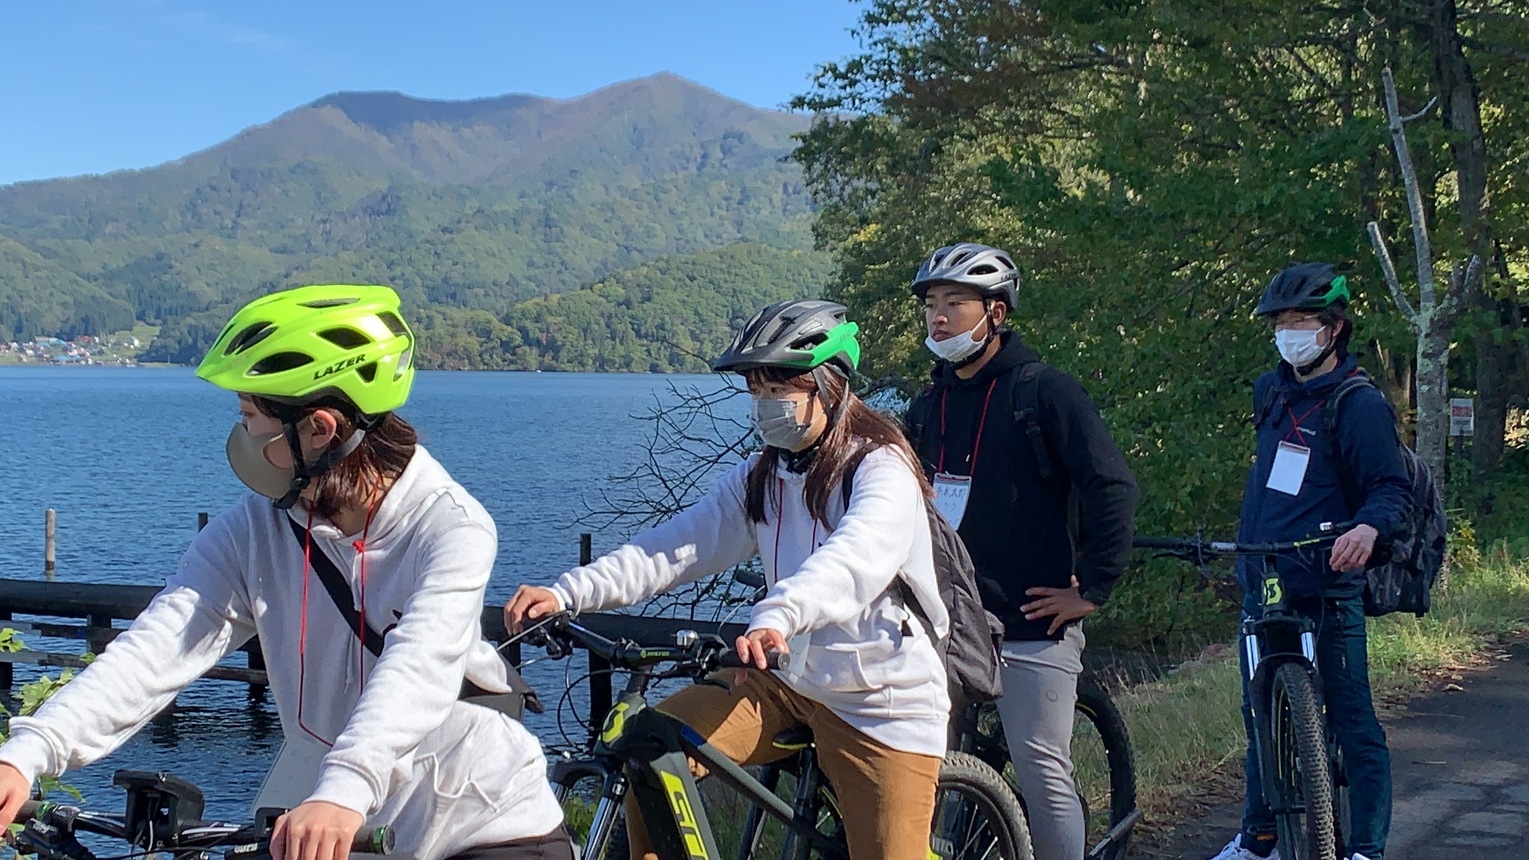 【e-bikeサイクリング】黒姫高原の里山を自転車に乗って巡ろう・ガイド付き（素泊まり）